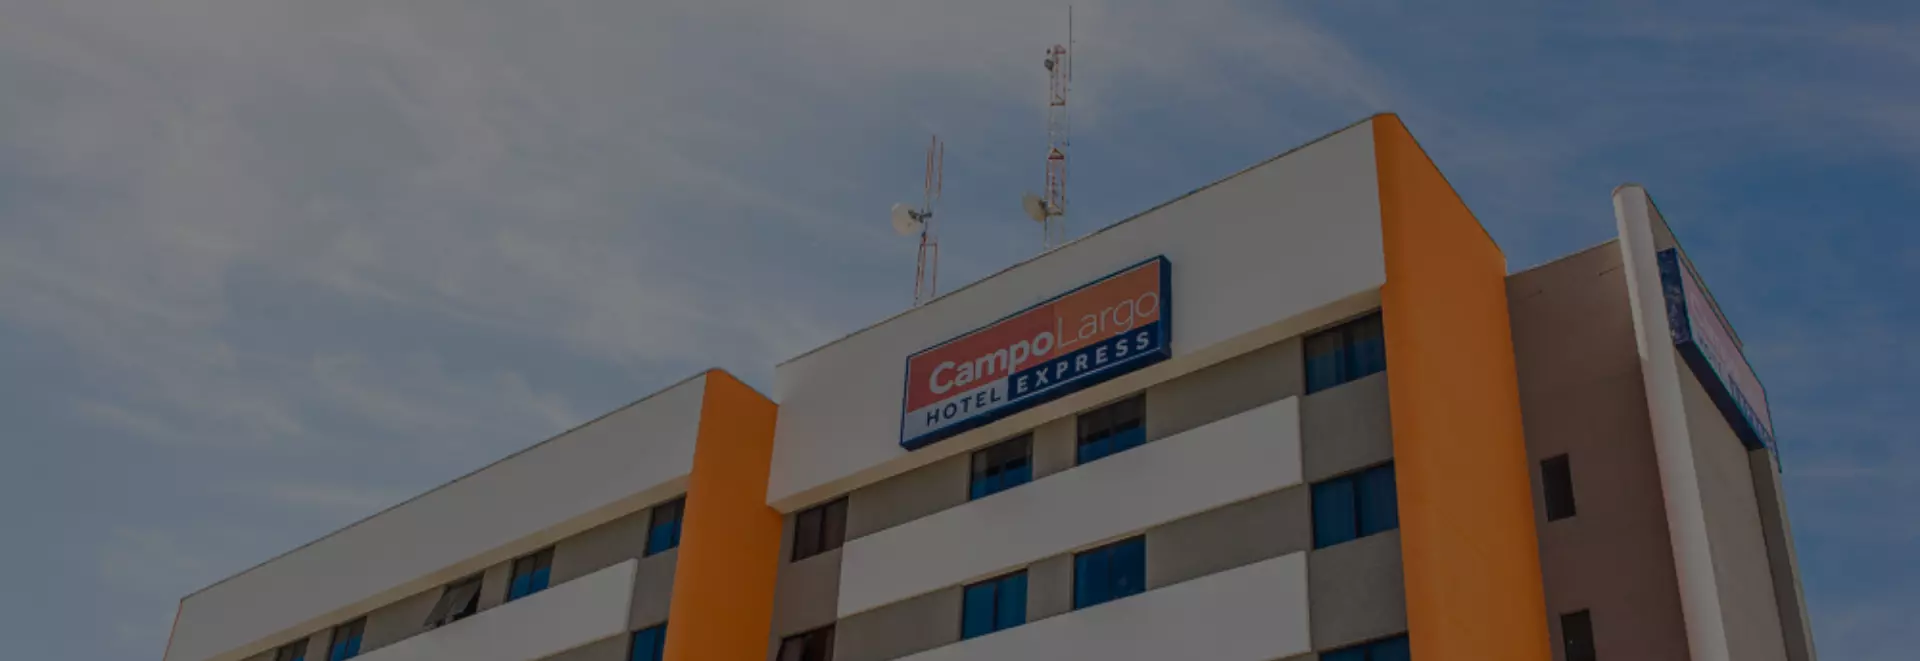 Hotel - Campo Largo Comfort - Grupo HCL